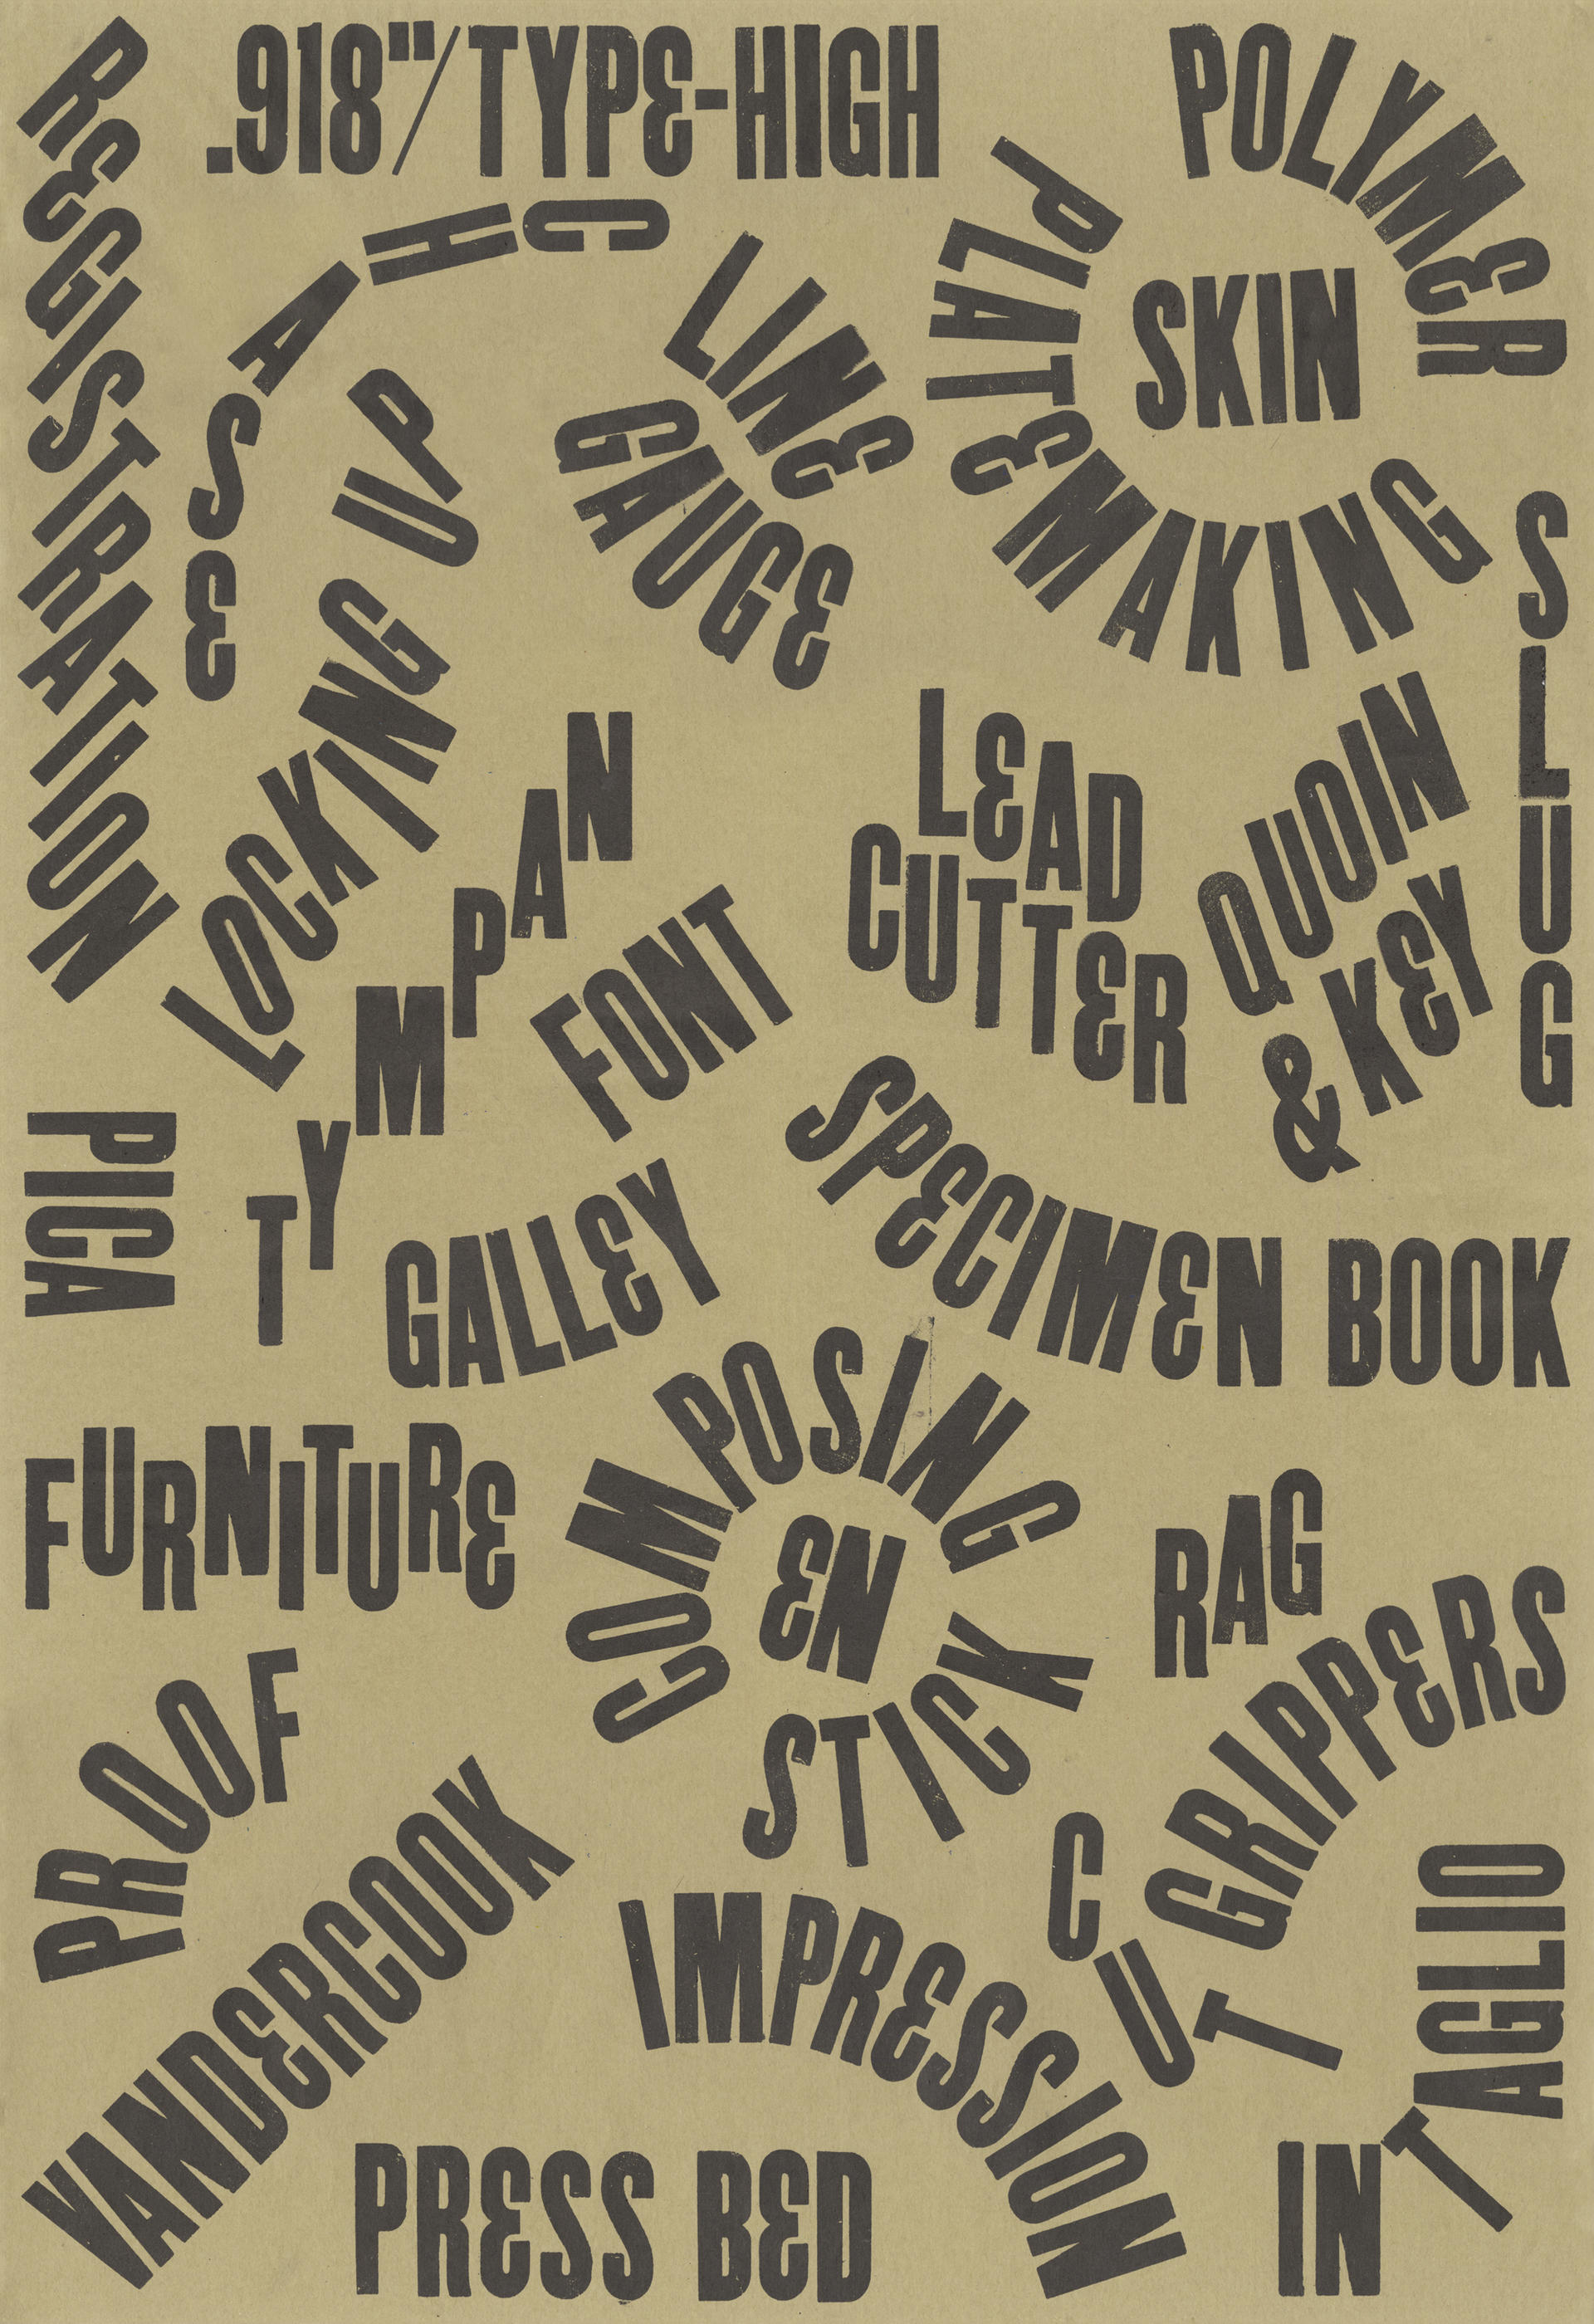 Letterpress printed poster of letterpress printing terms